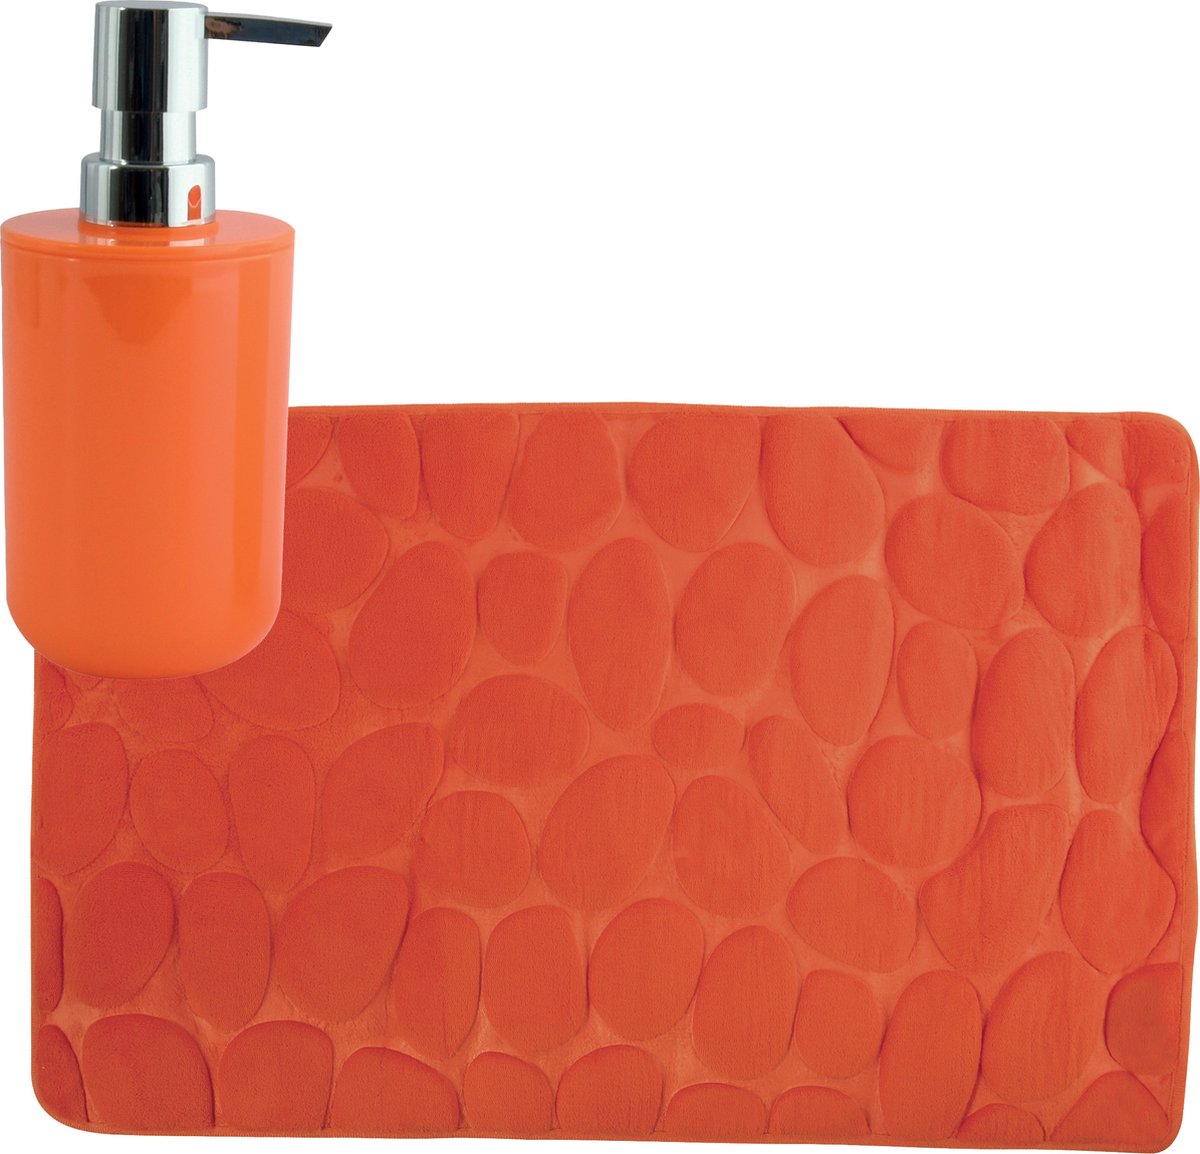 MSV badkamer droogloop mat tapijt Kiezel motief 50 x 80 cm zelfde kleur zeeppompje 260 ml oranje